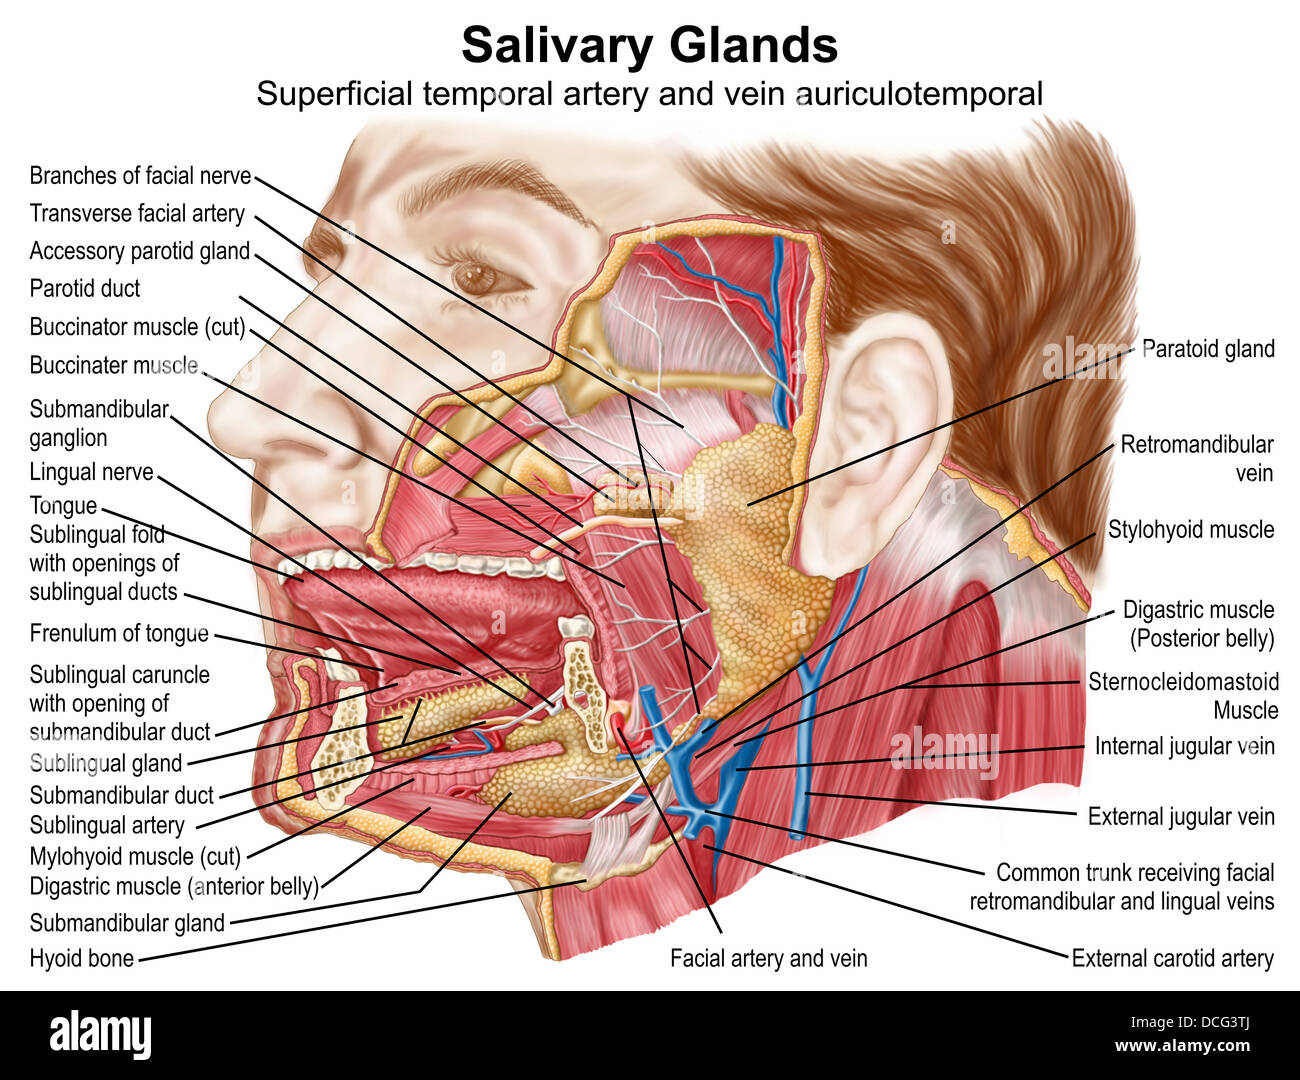 Anatomy of human salivary glands Stock Photo: 59361250 - Alamy